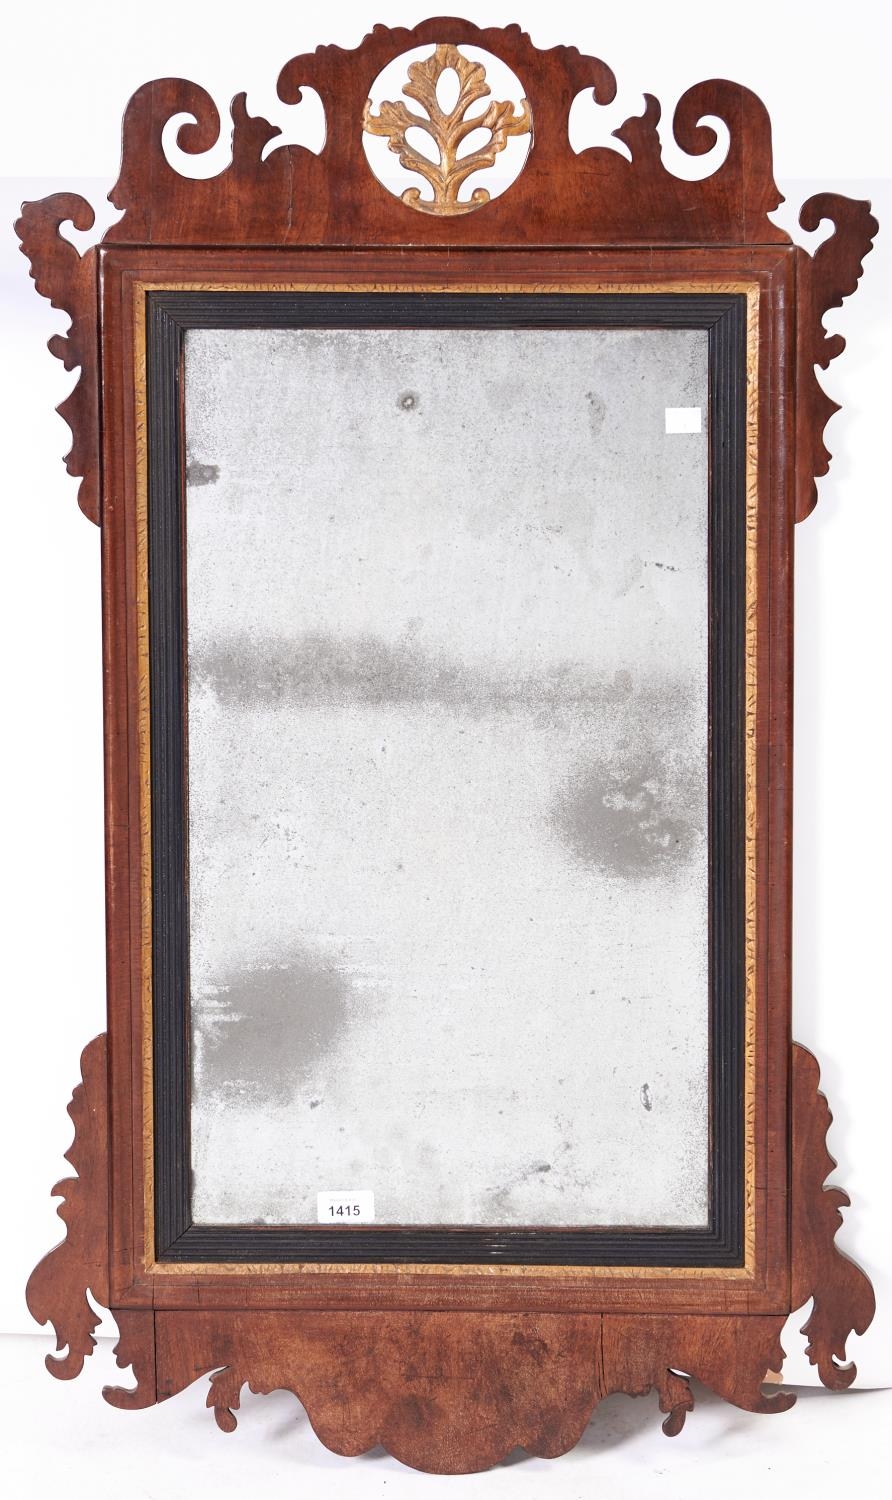 A Victorian walnut and giltwood fretwork mirror, 98 x 57cm Some shrinkage cracks to frame, mirror